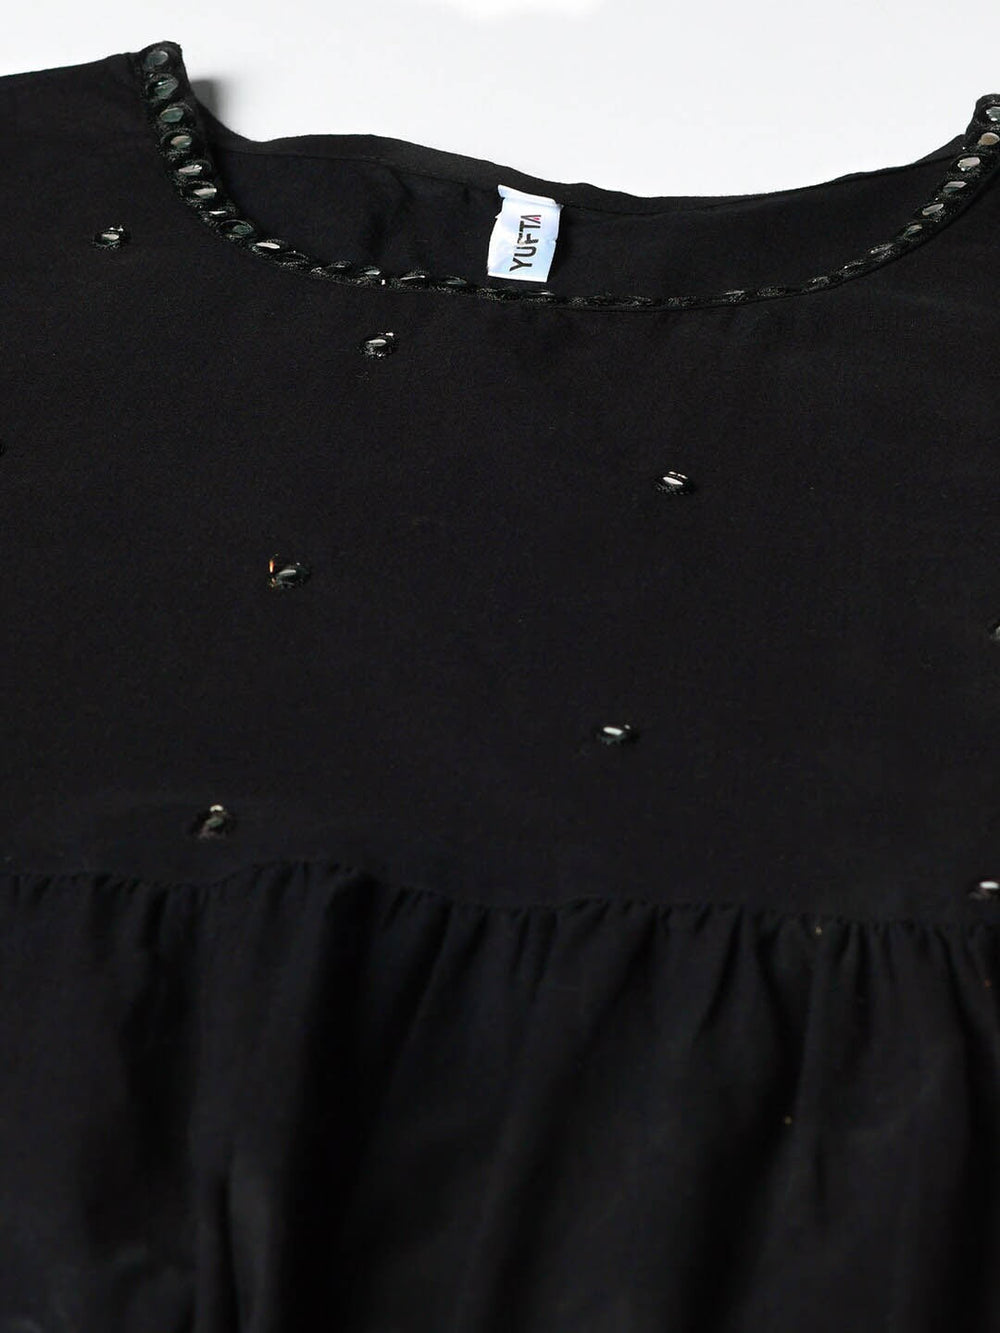 Black A-Line Dress-Yufta Store-7548KURBKS